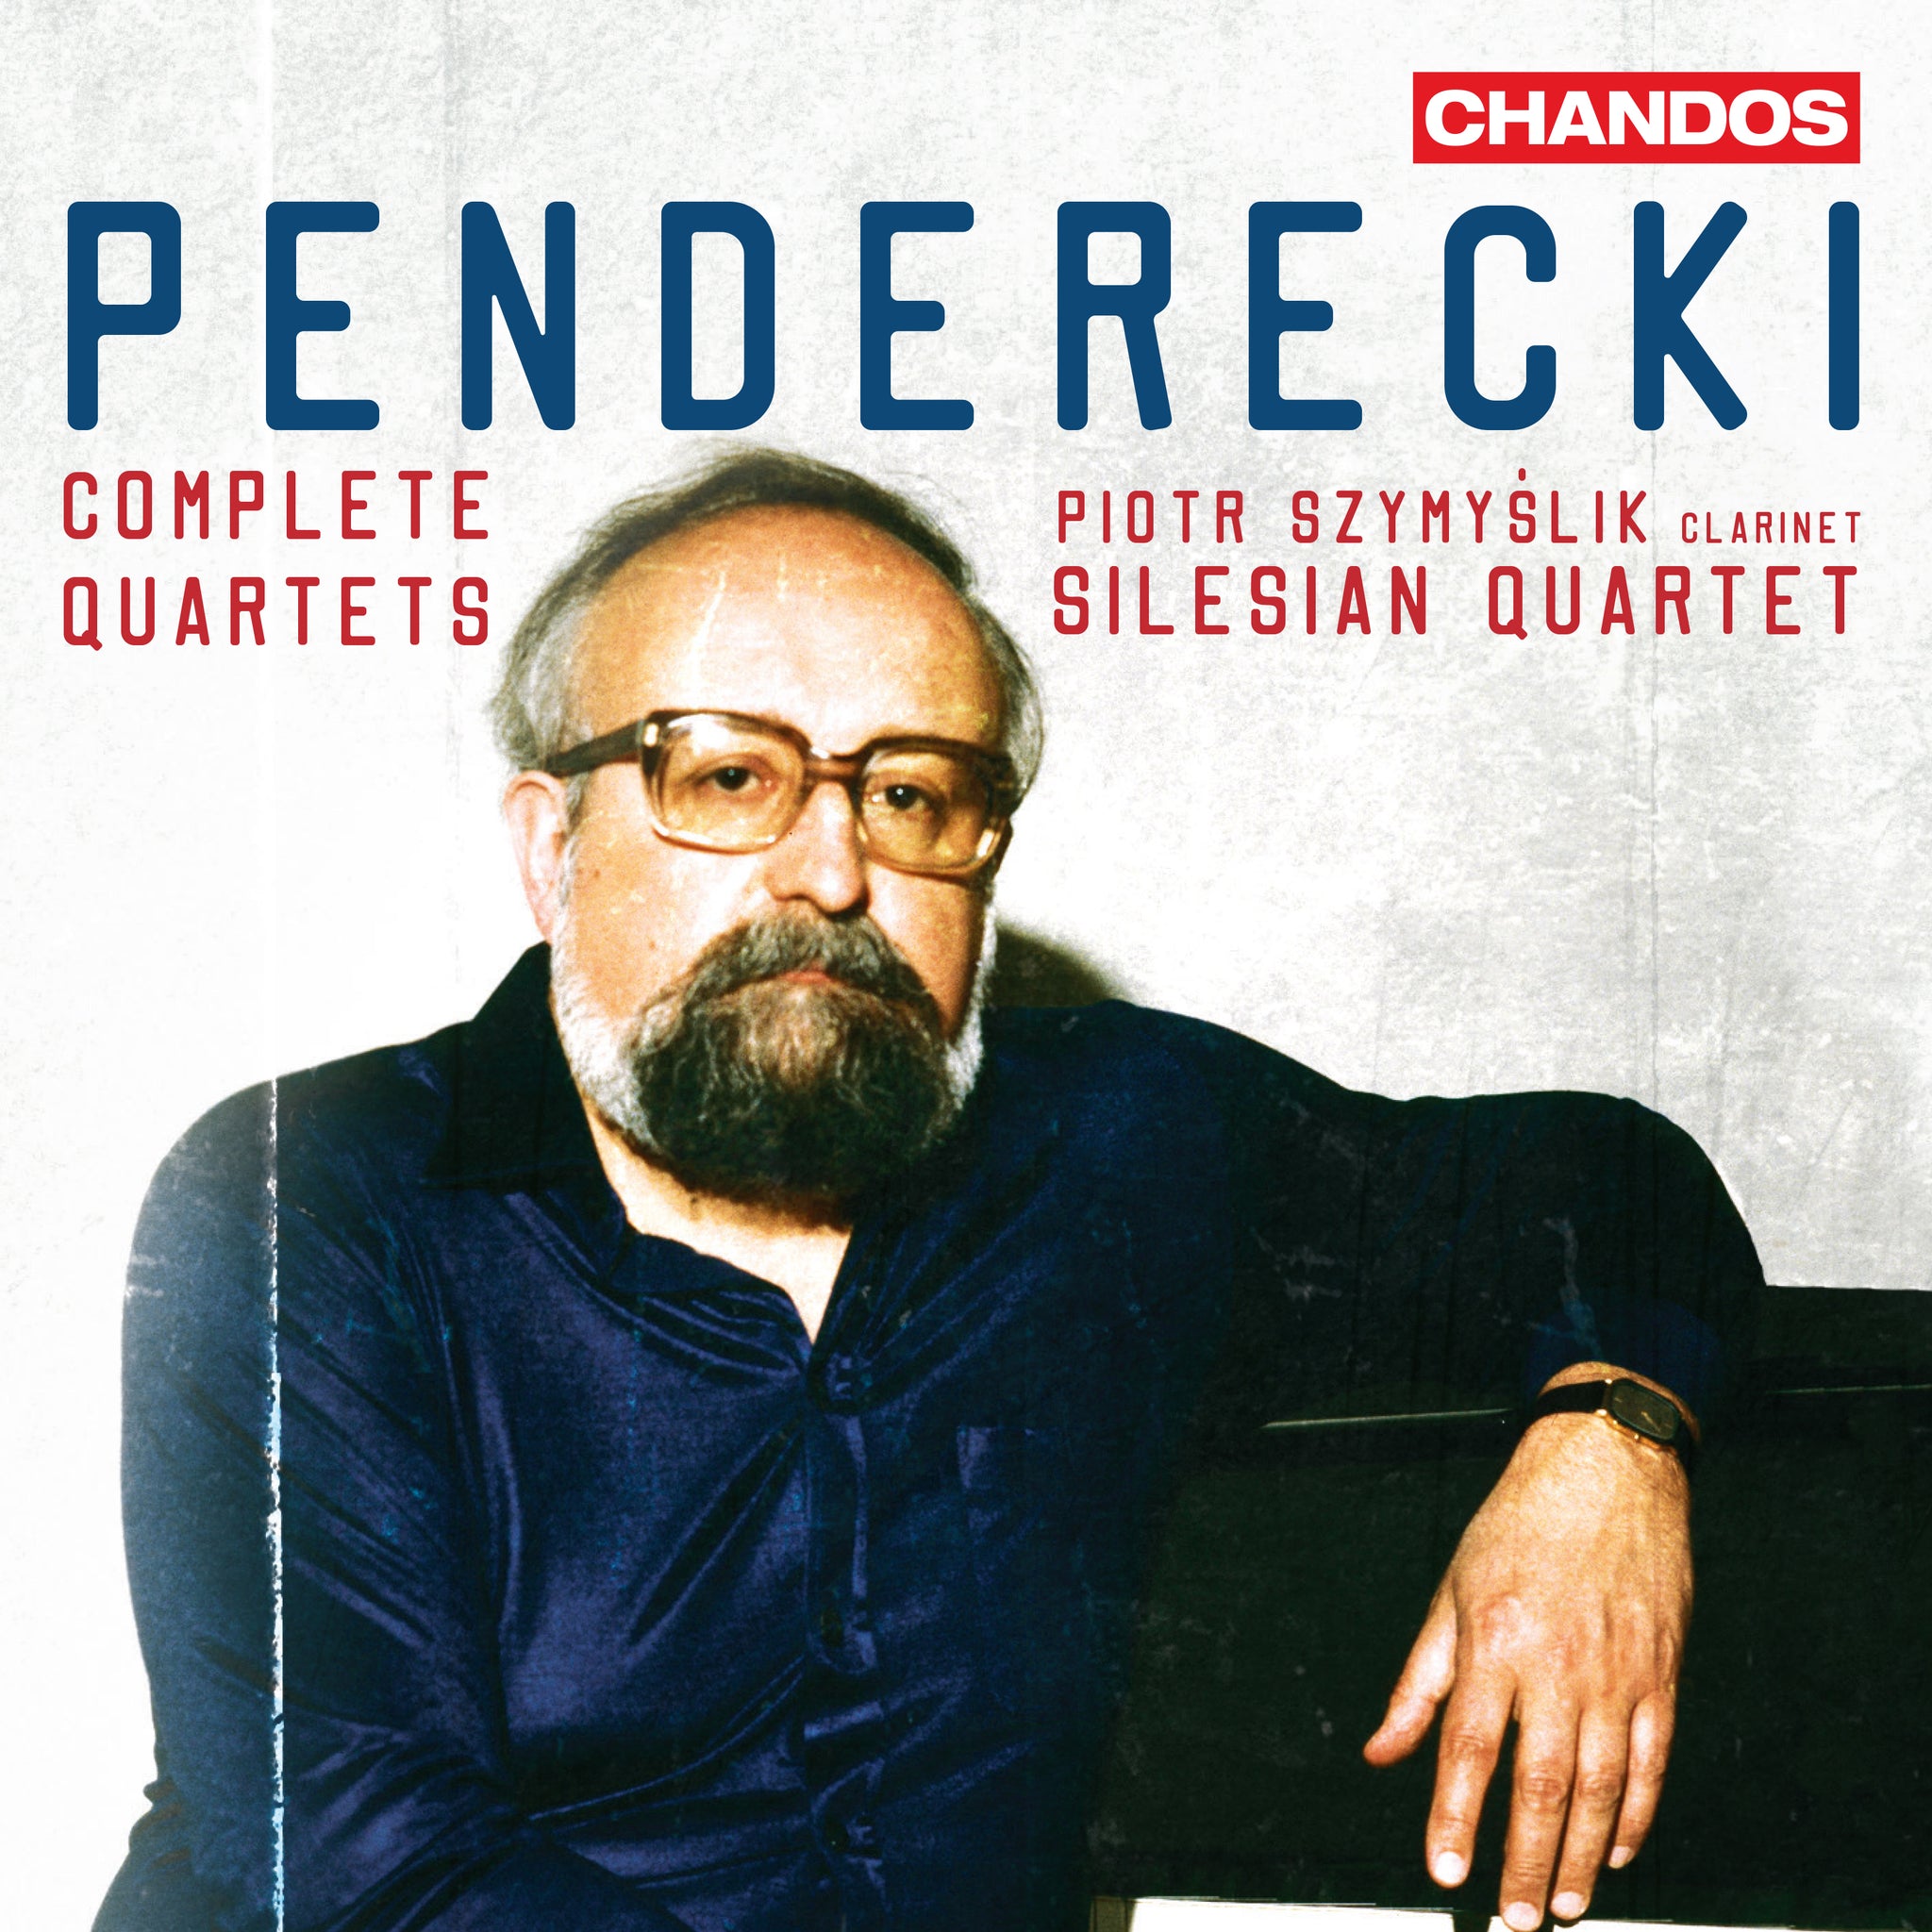 Penderecki: Complete Quartets / Szymyslik, Silesian Quartet